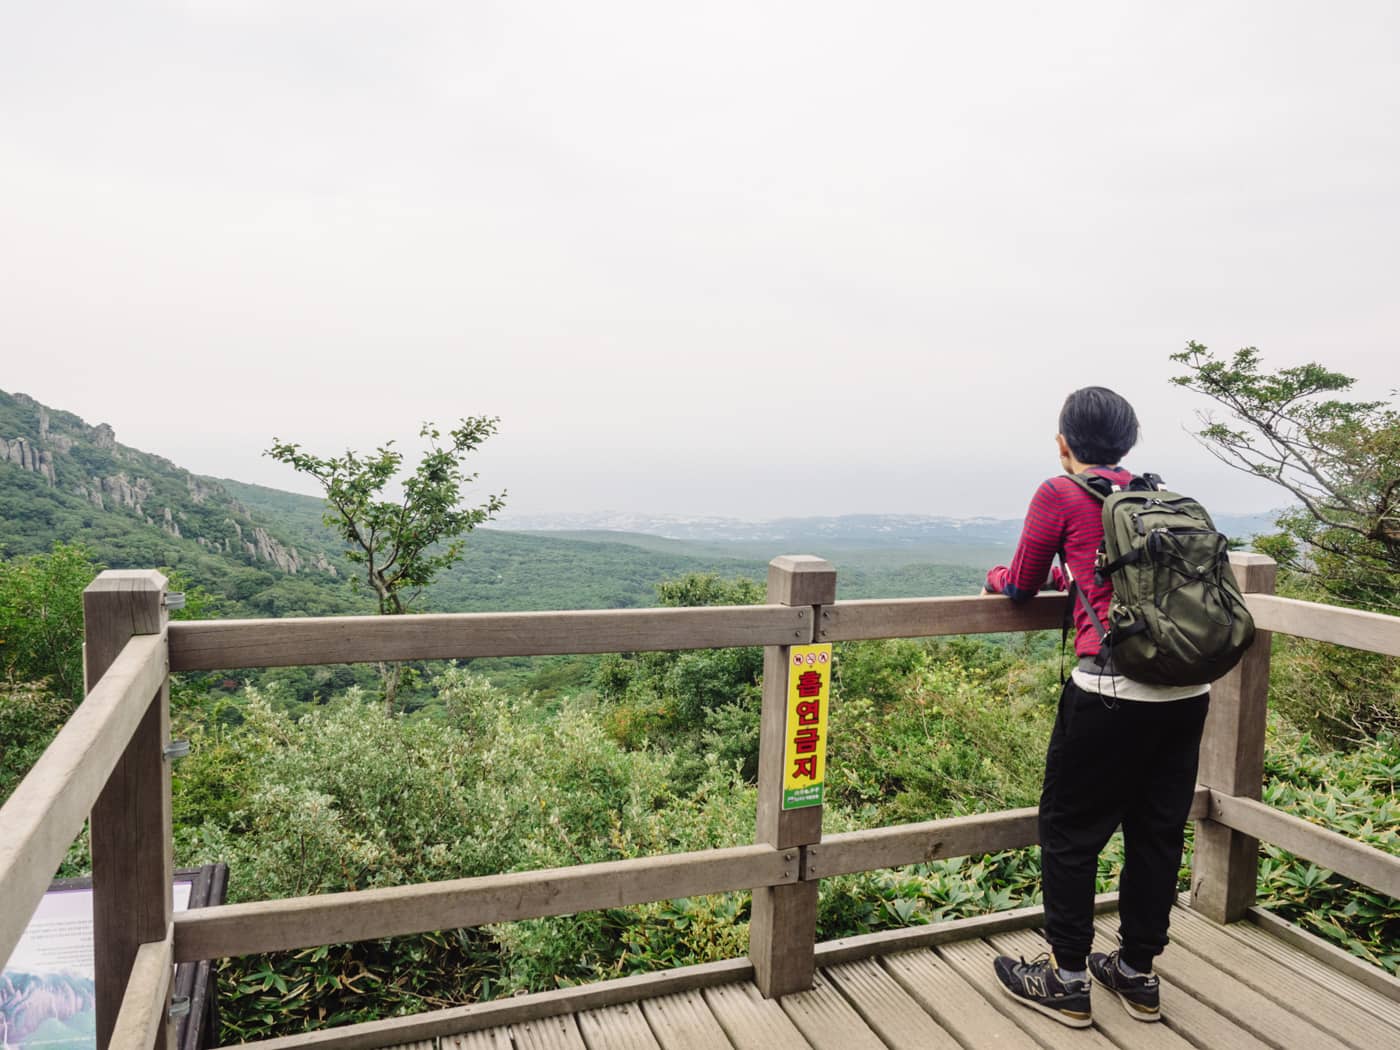 Korea - Mt Hallasan - Wy taking a break and admiring the view